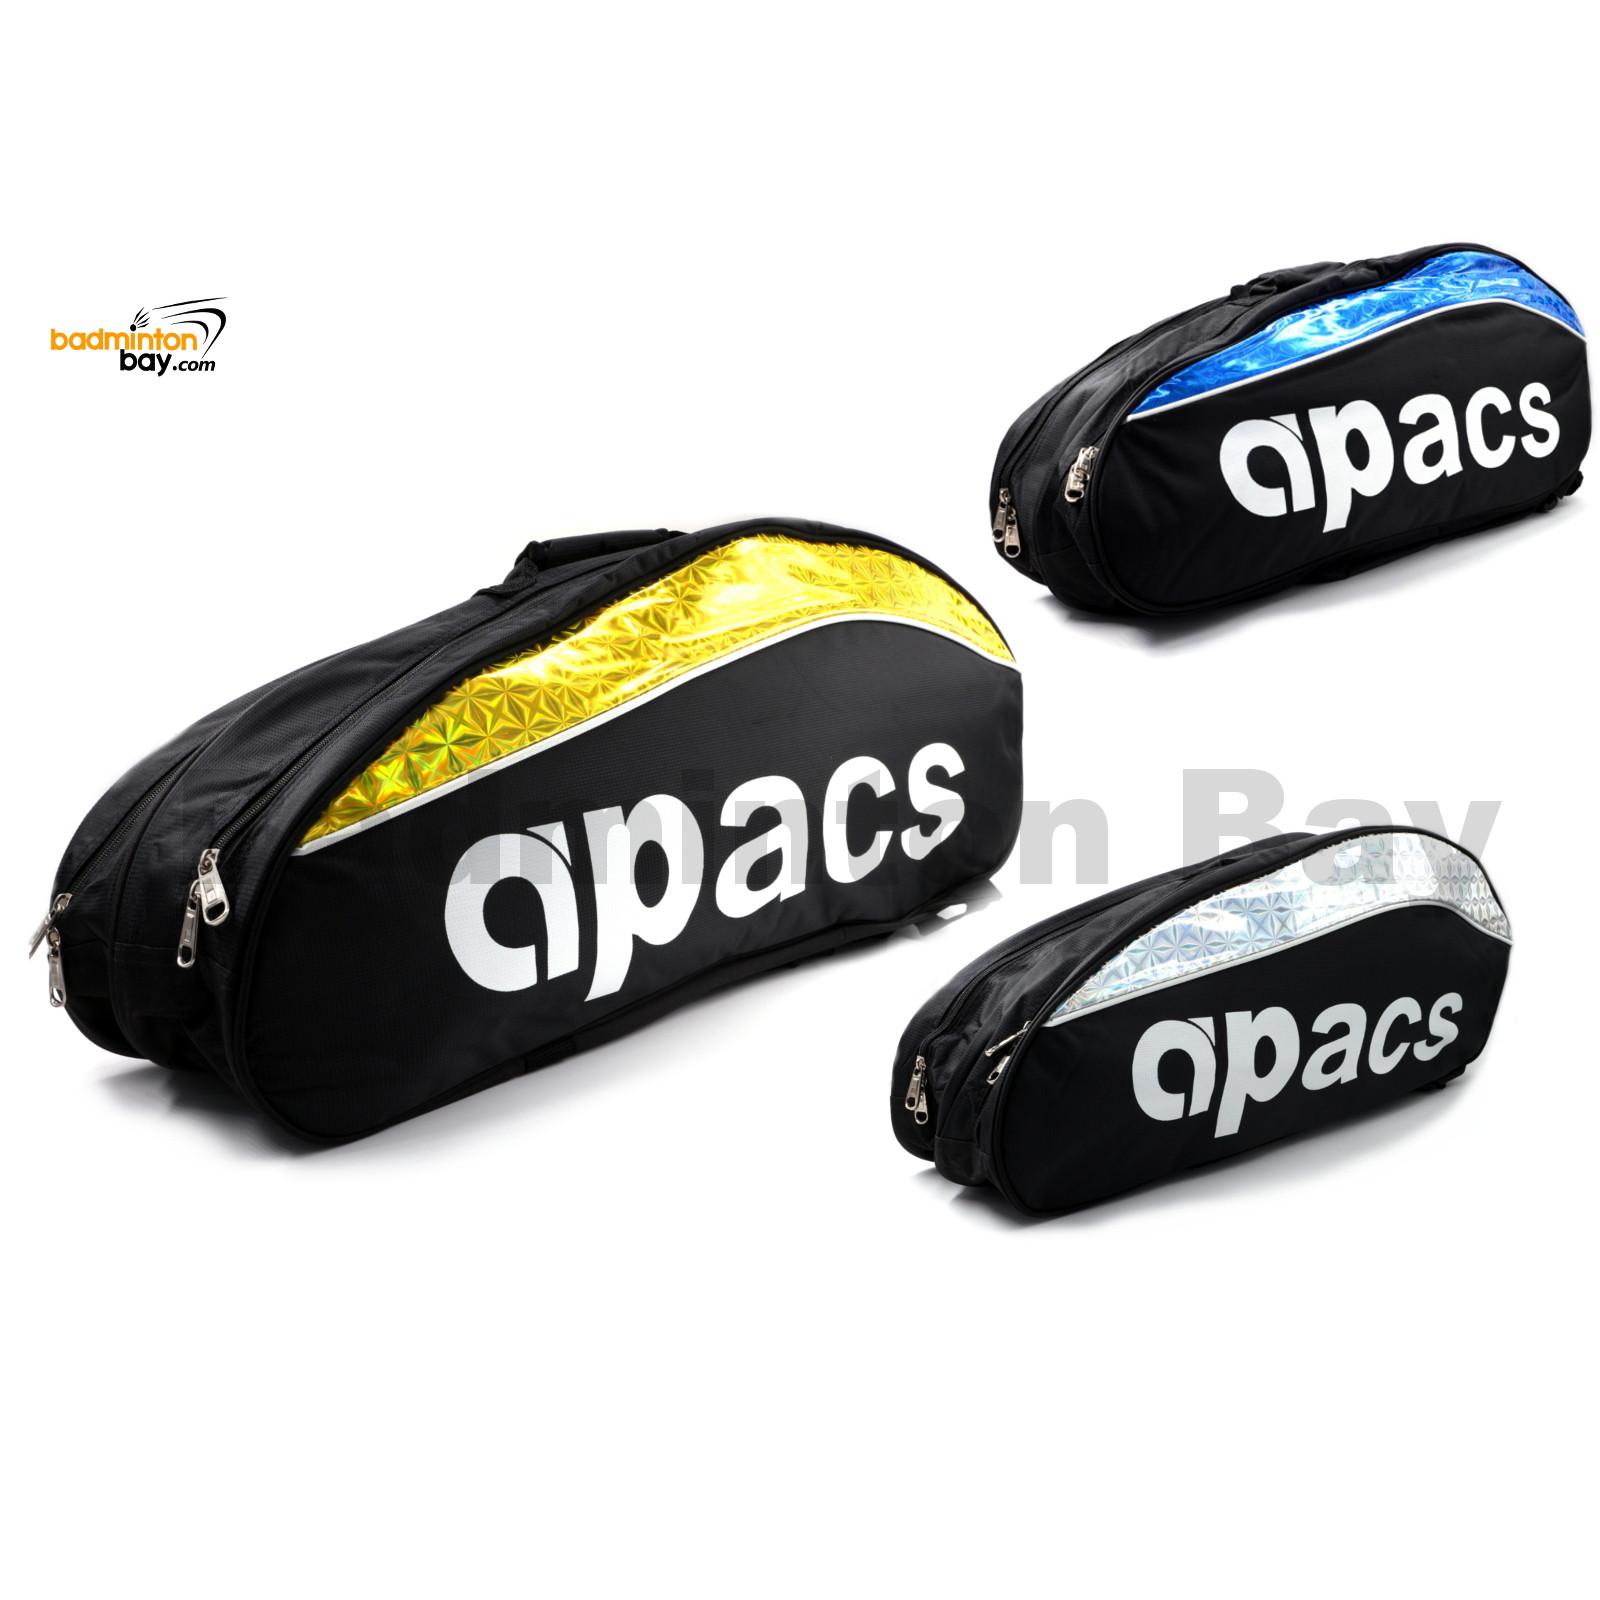 Apacs Badminton Racket Bag Sale Online, SAVE 53%